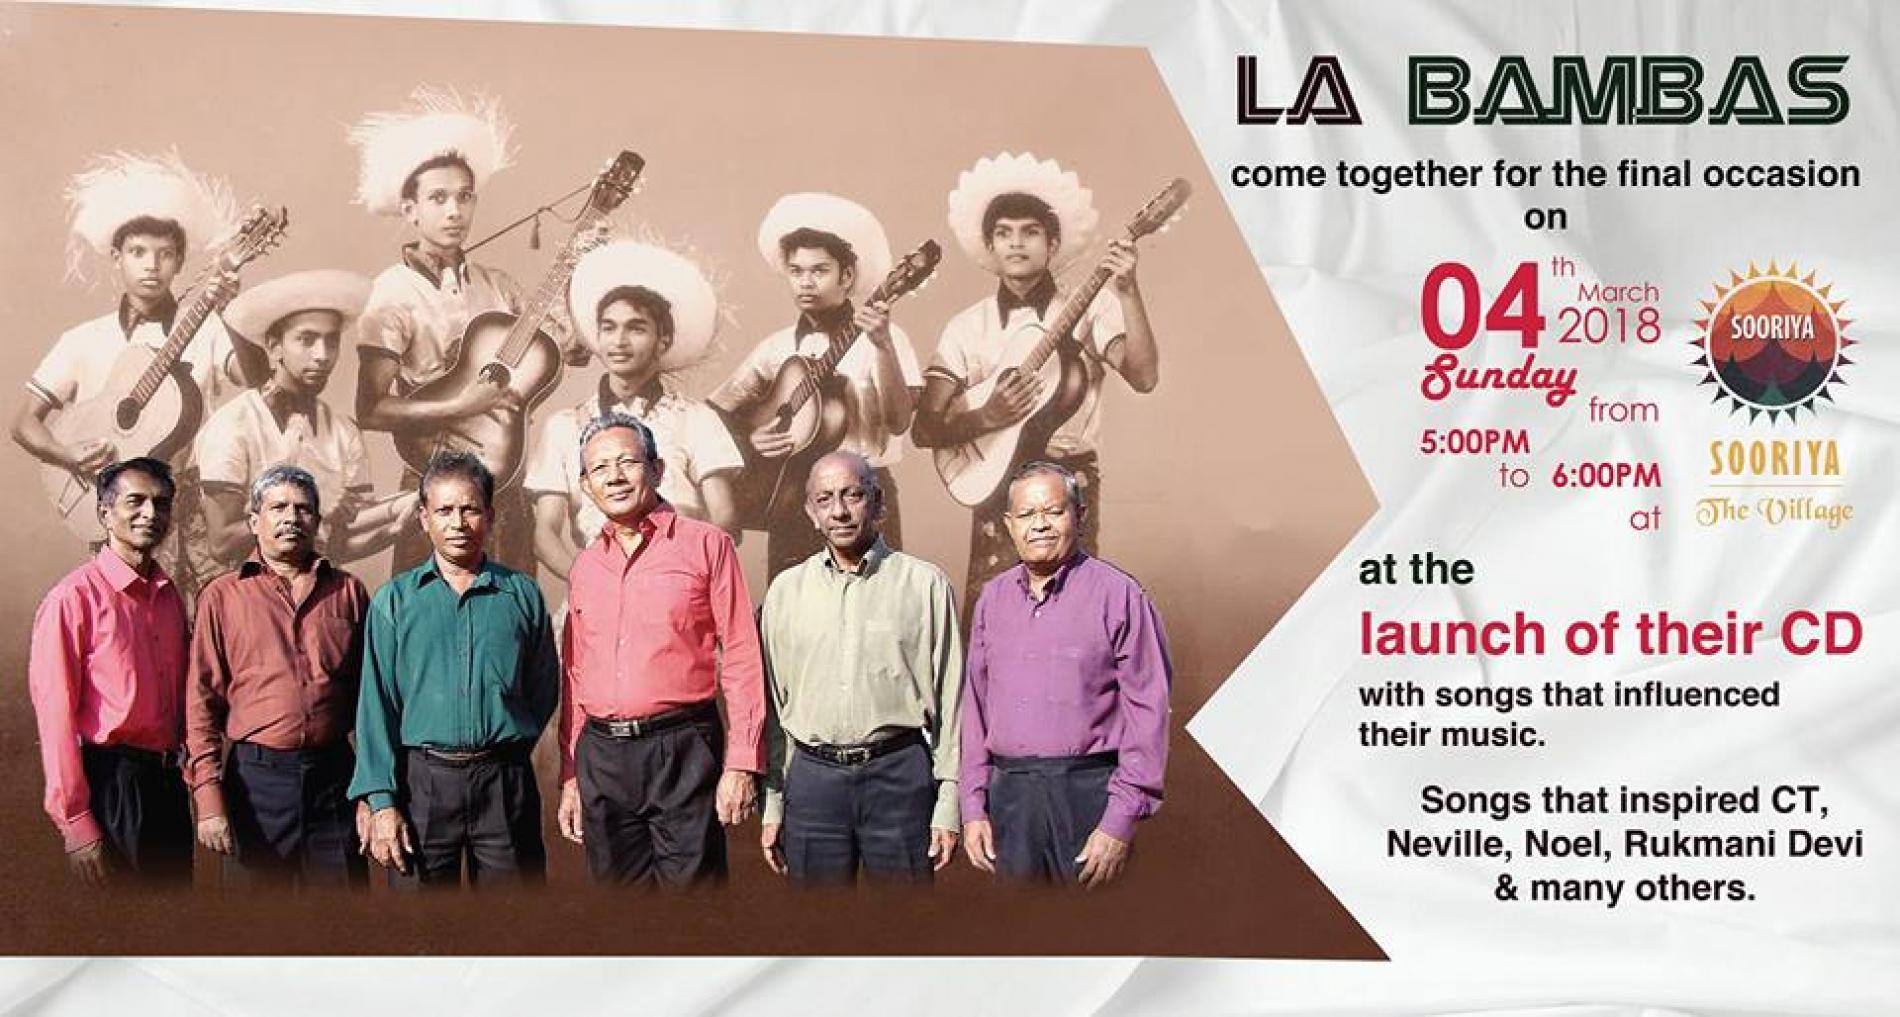 Meet & Greet La Bambas At Their CD Launch